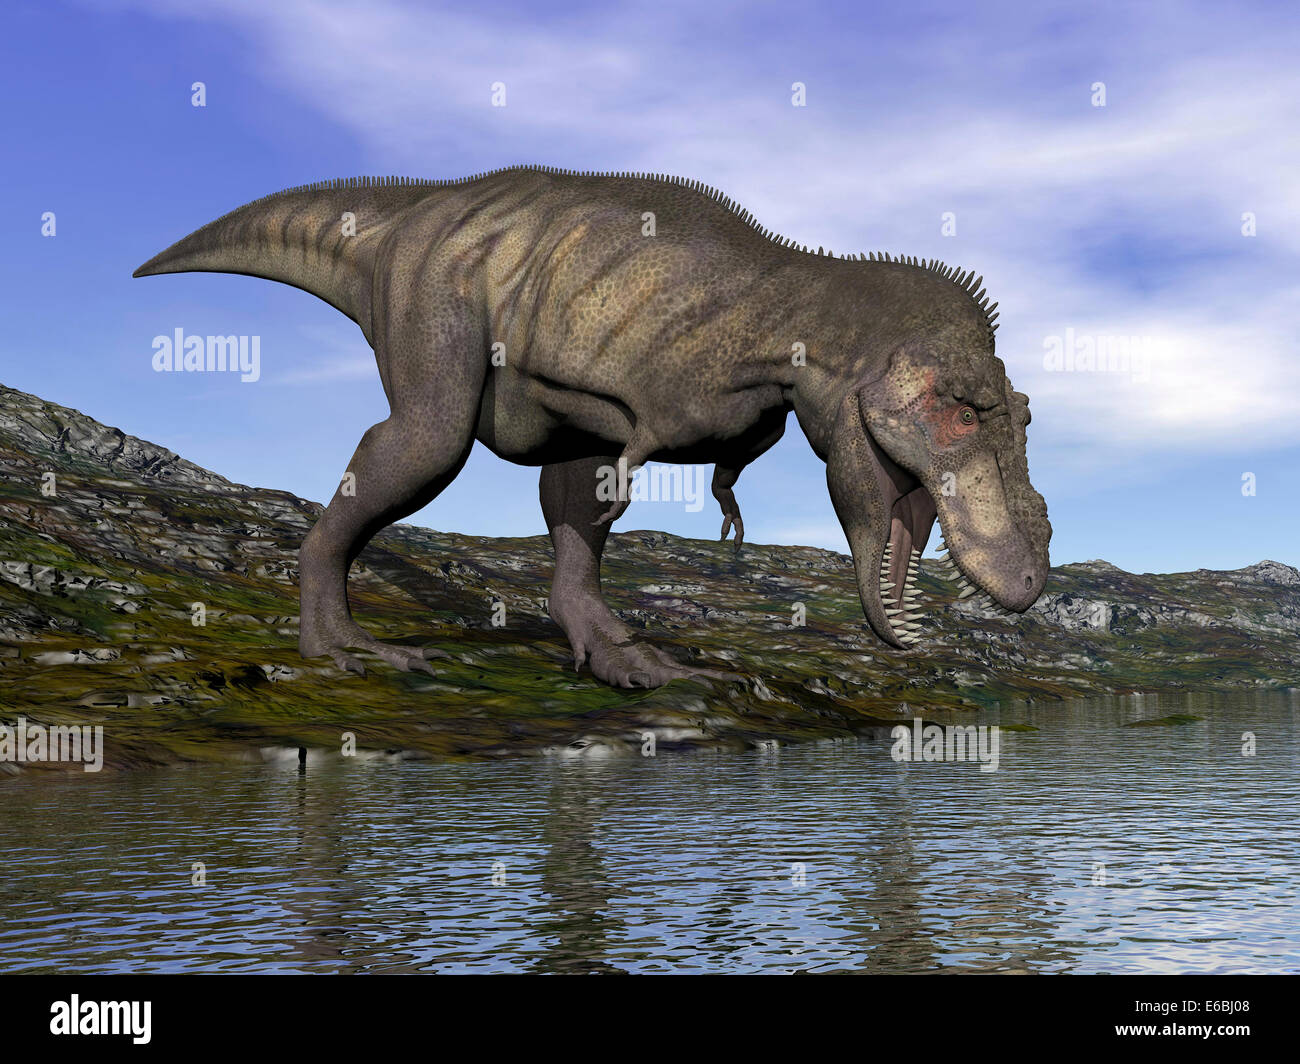 Dinosaure Tyrannosaurus rex balade au bord de l'eau. Banque D'Images